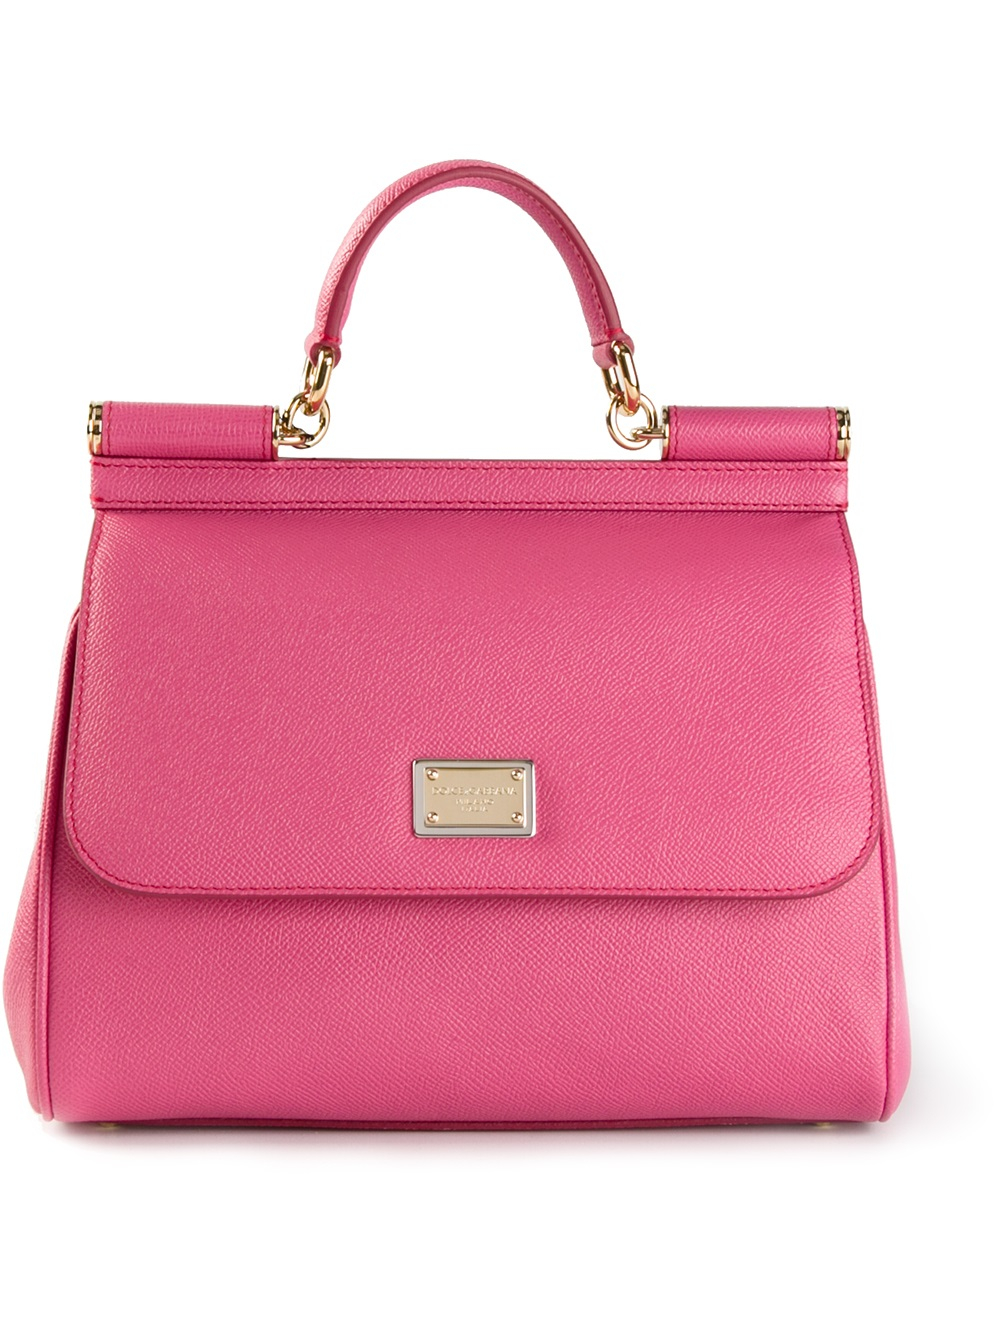 Dolce & Gabbana Miss Sicily Bag in Pink & Purple (Pink) - Lyst